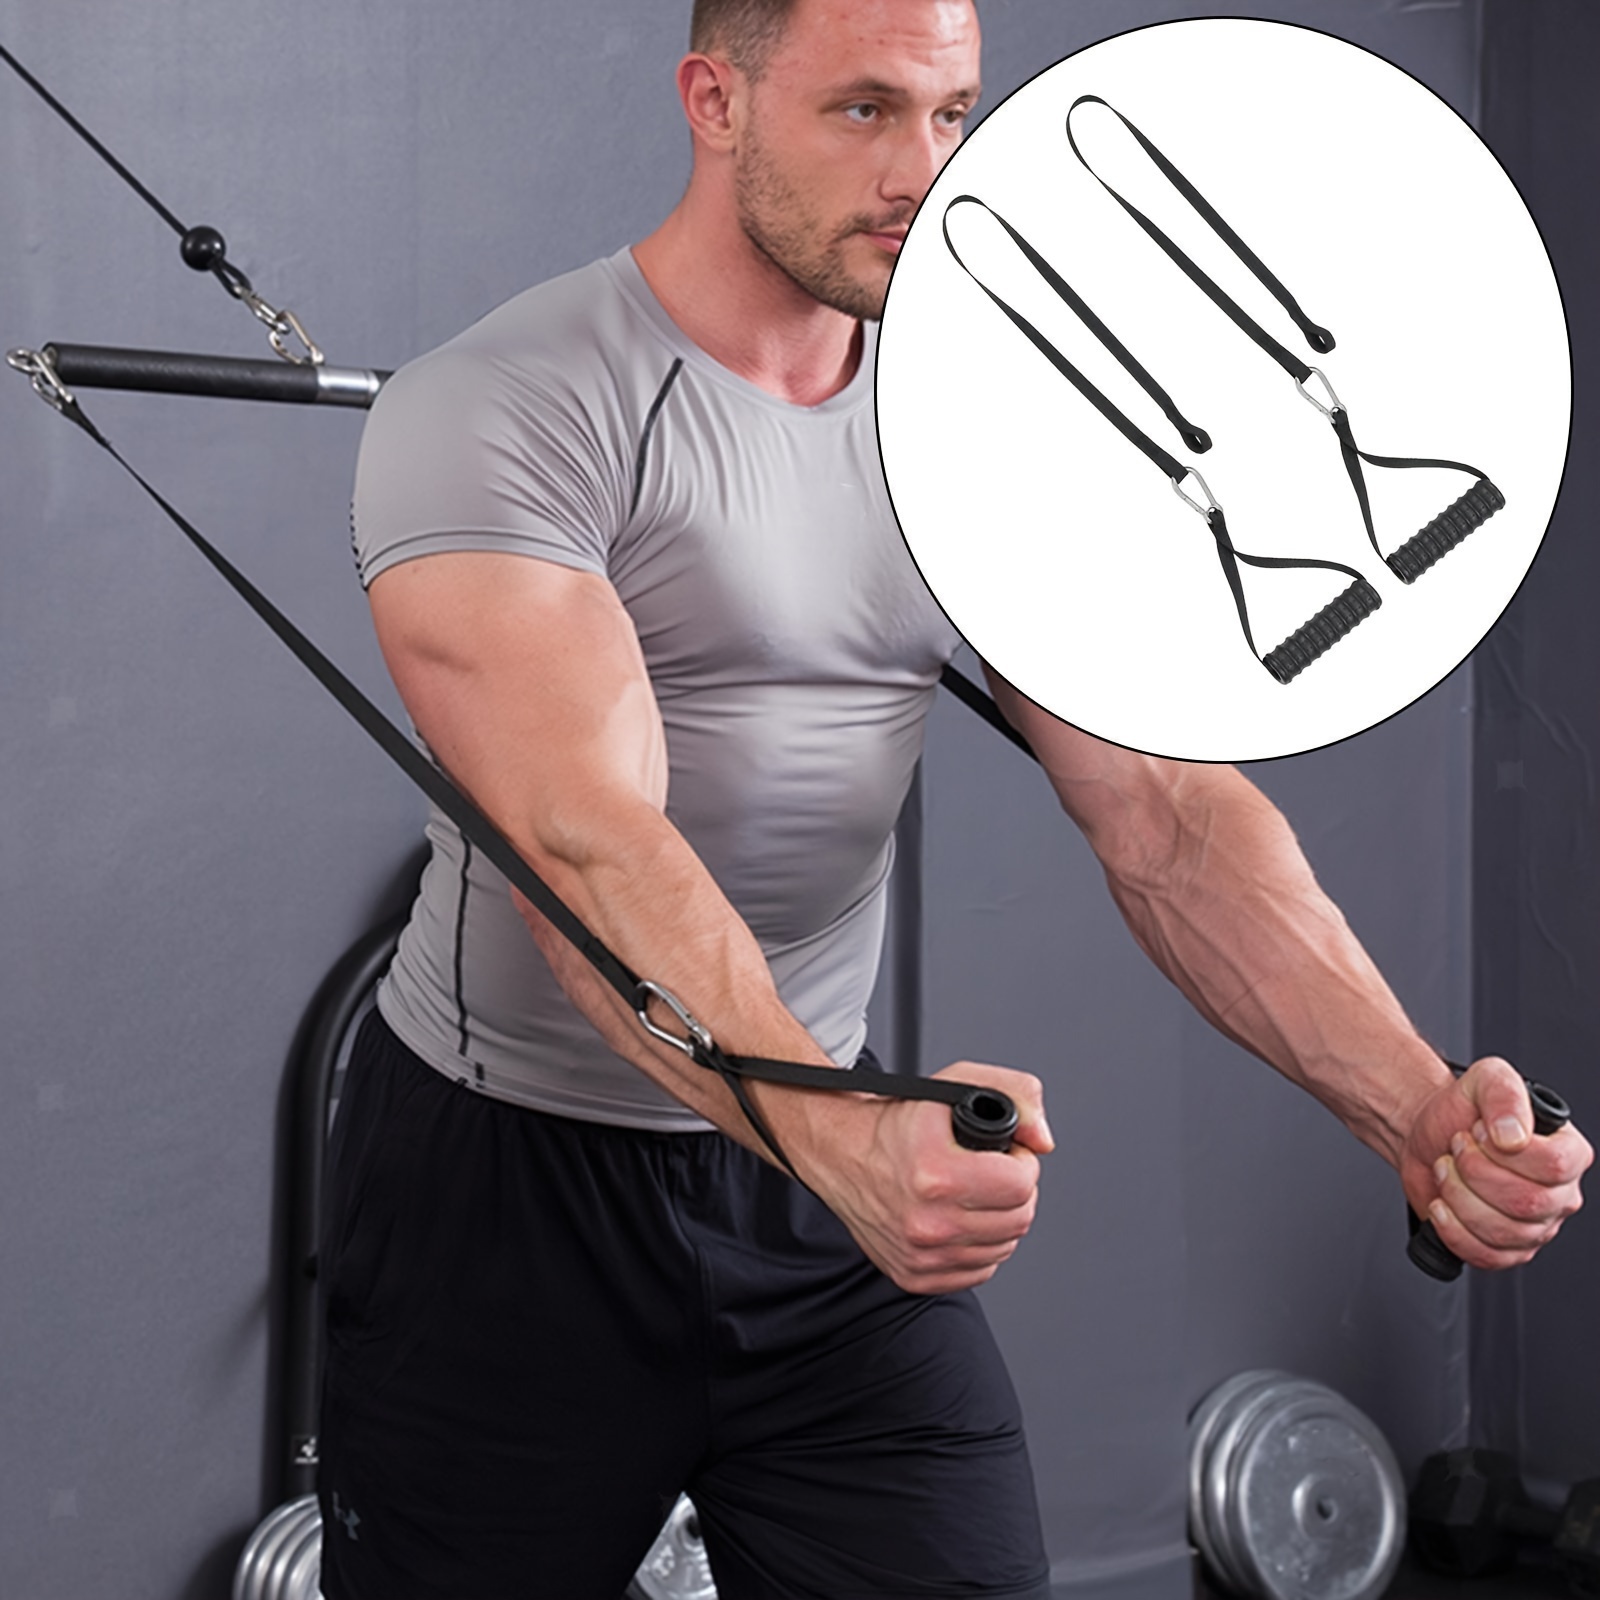 Lazo / Cuerda Para Triceps Crossfit